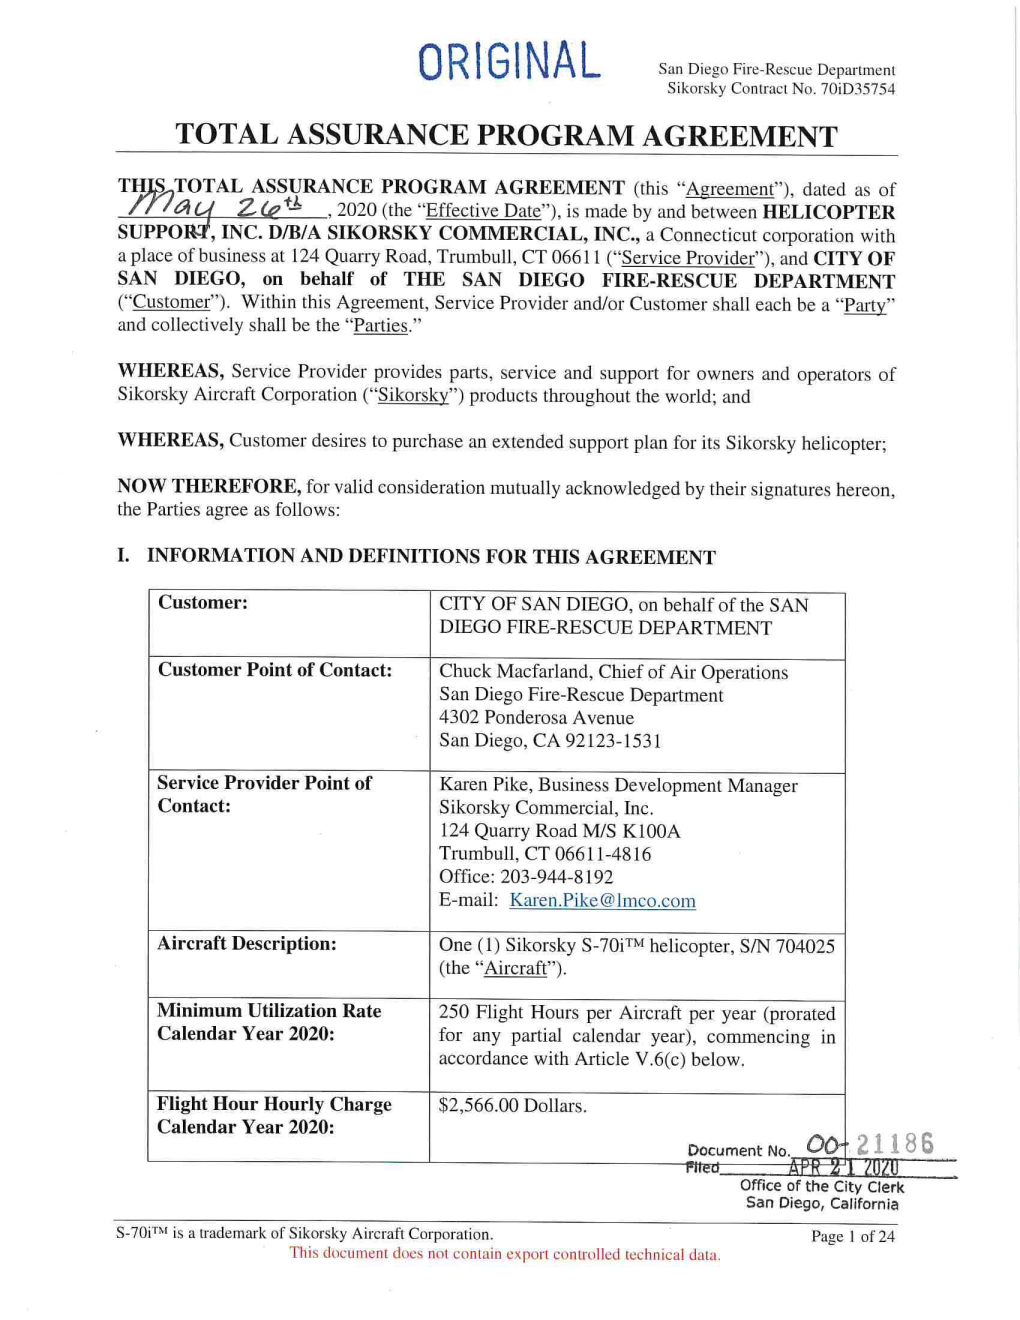 Total Assurance Program Agreement